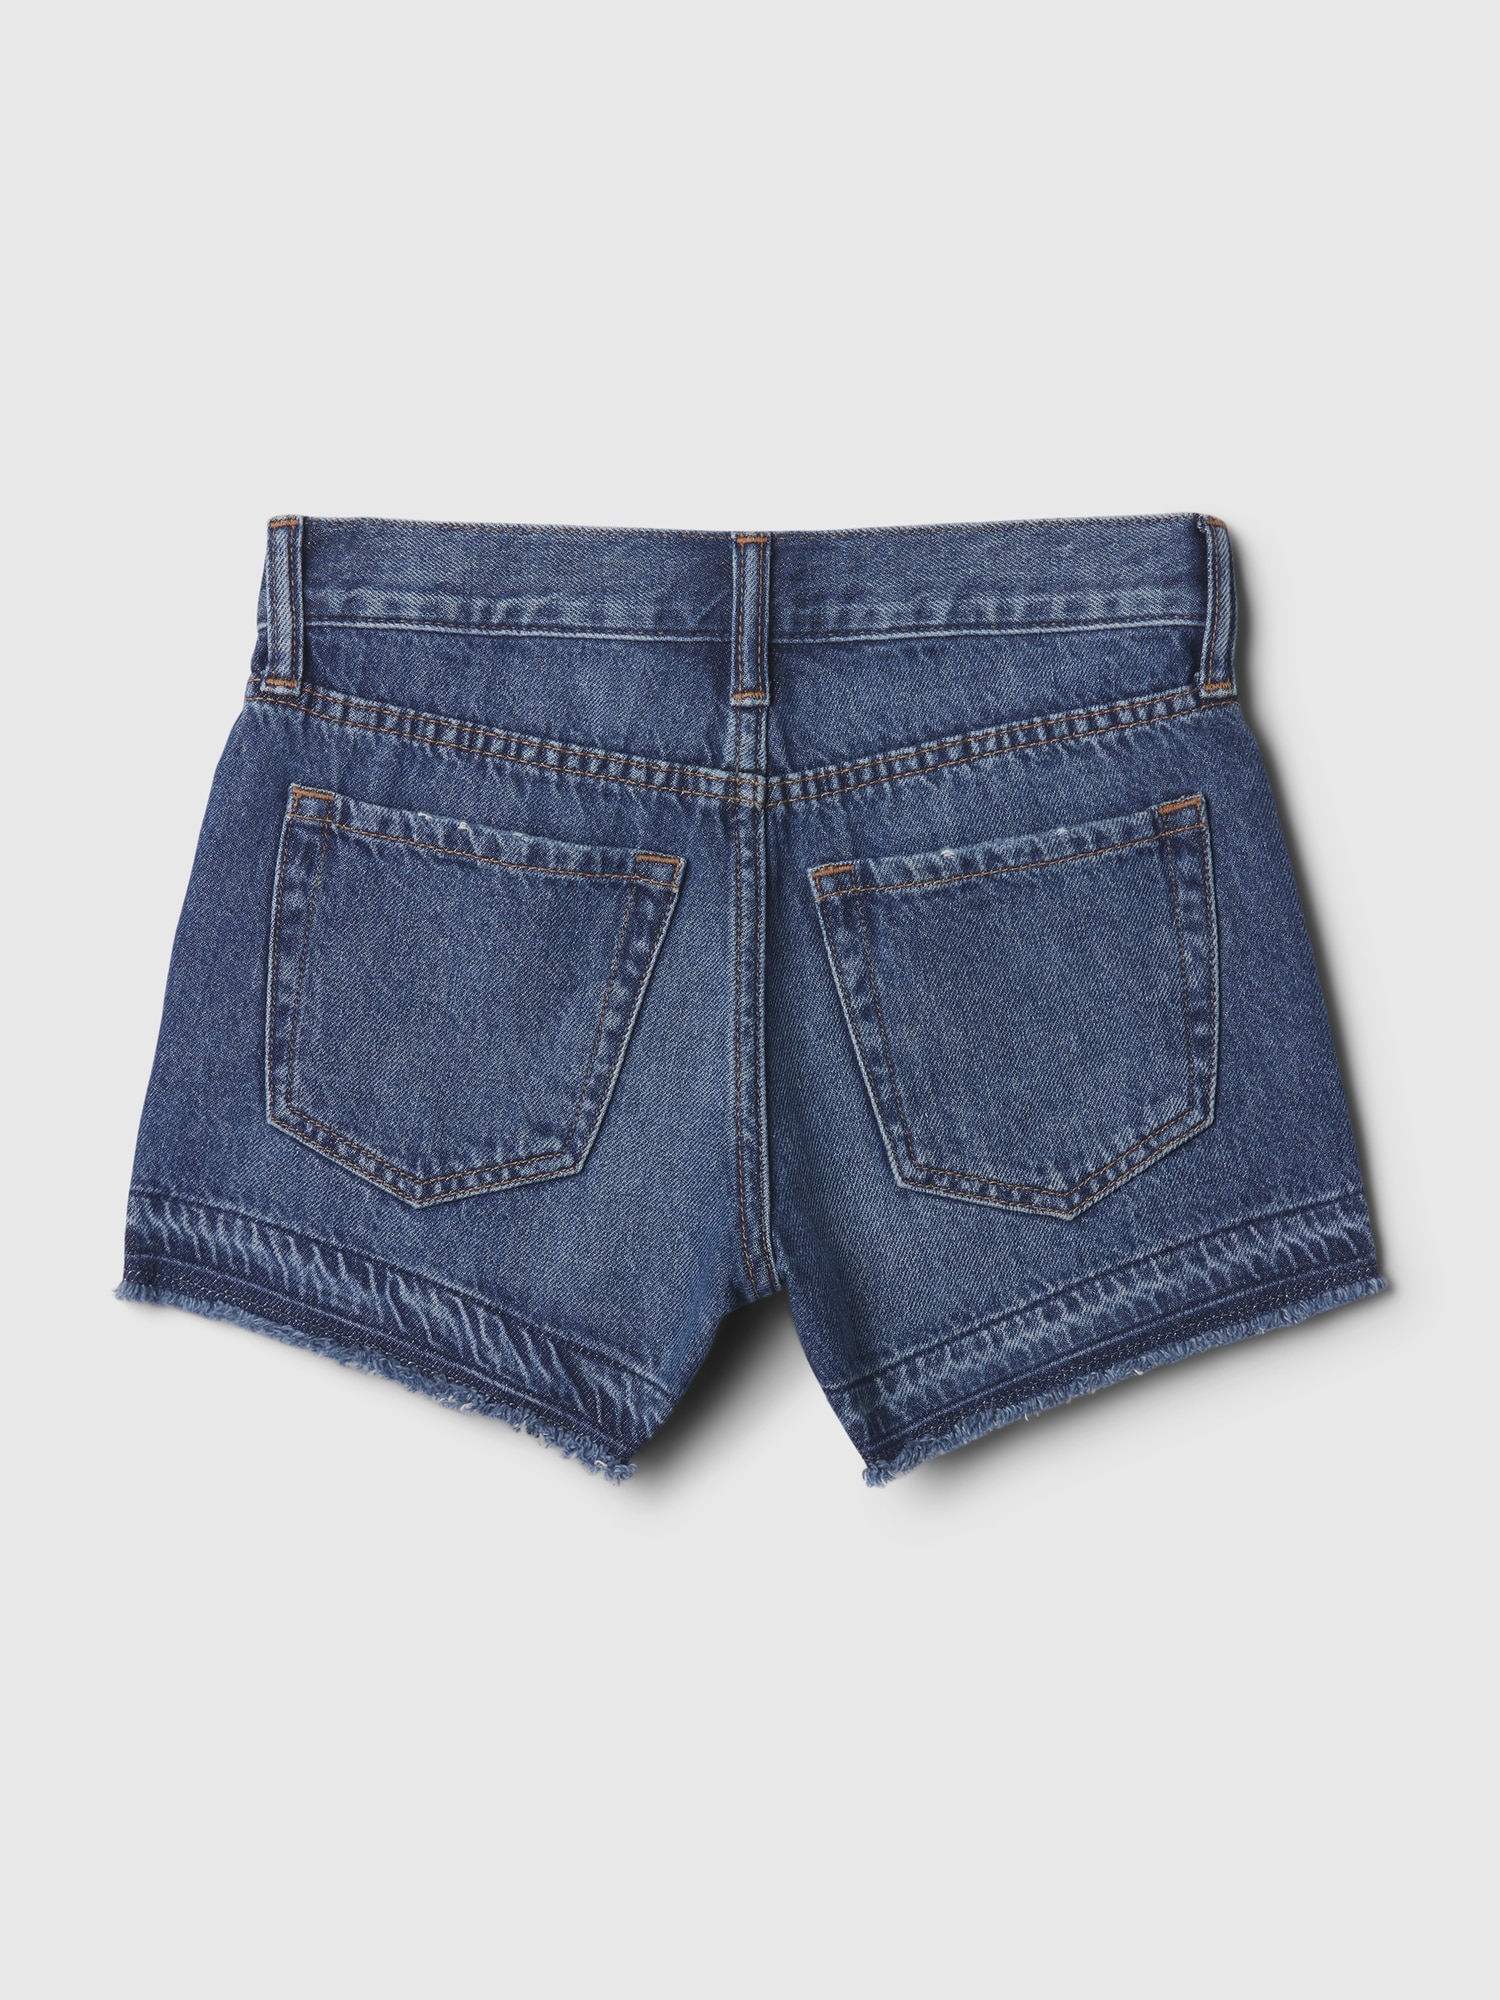 Low Rise Denim Shorts for Women Summer Stretchy Denim Jean Shorts Junior  Short Jeans